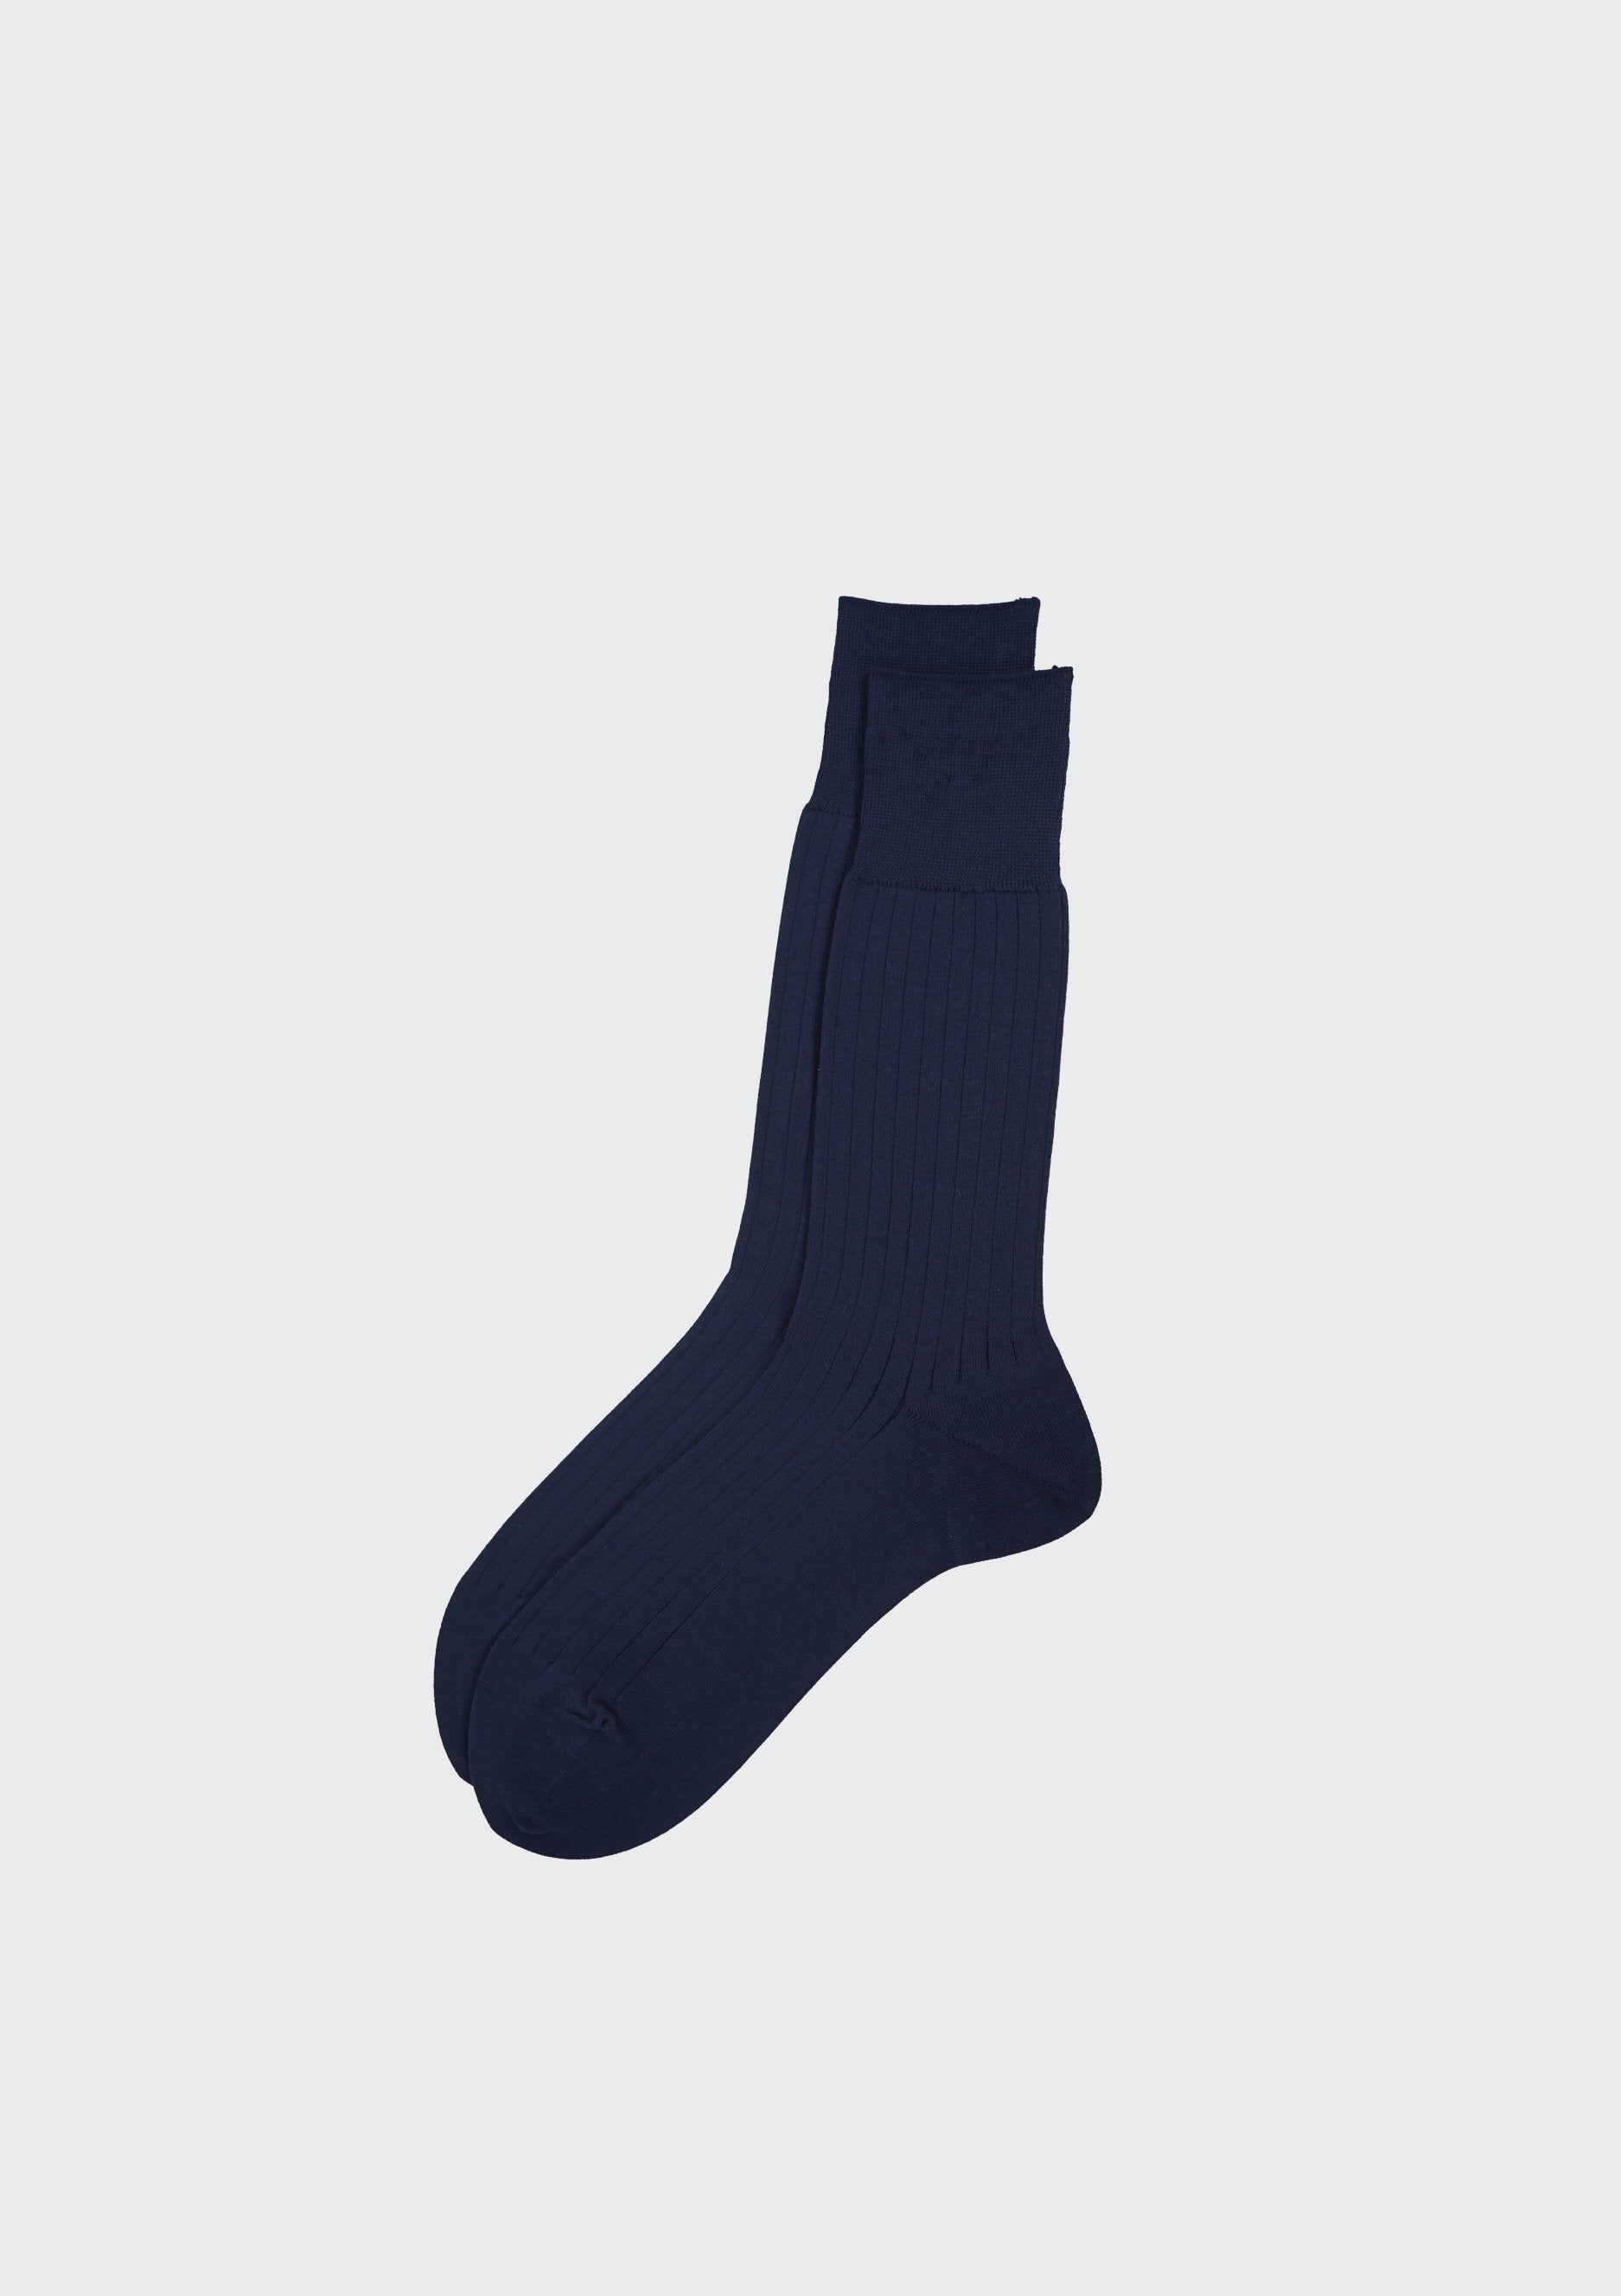 Dress Socks / Navy